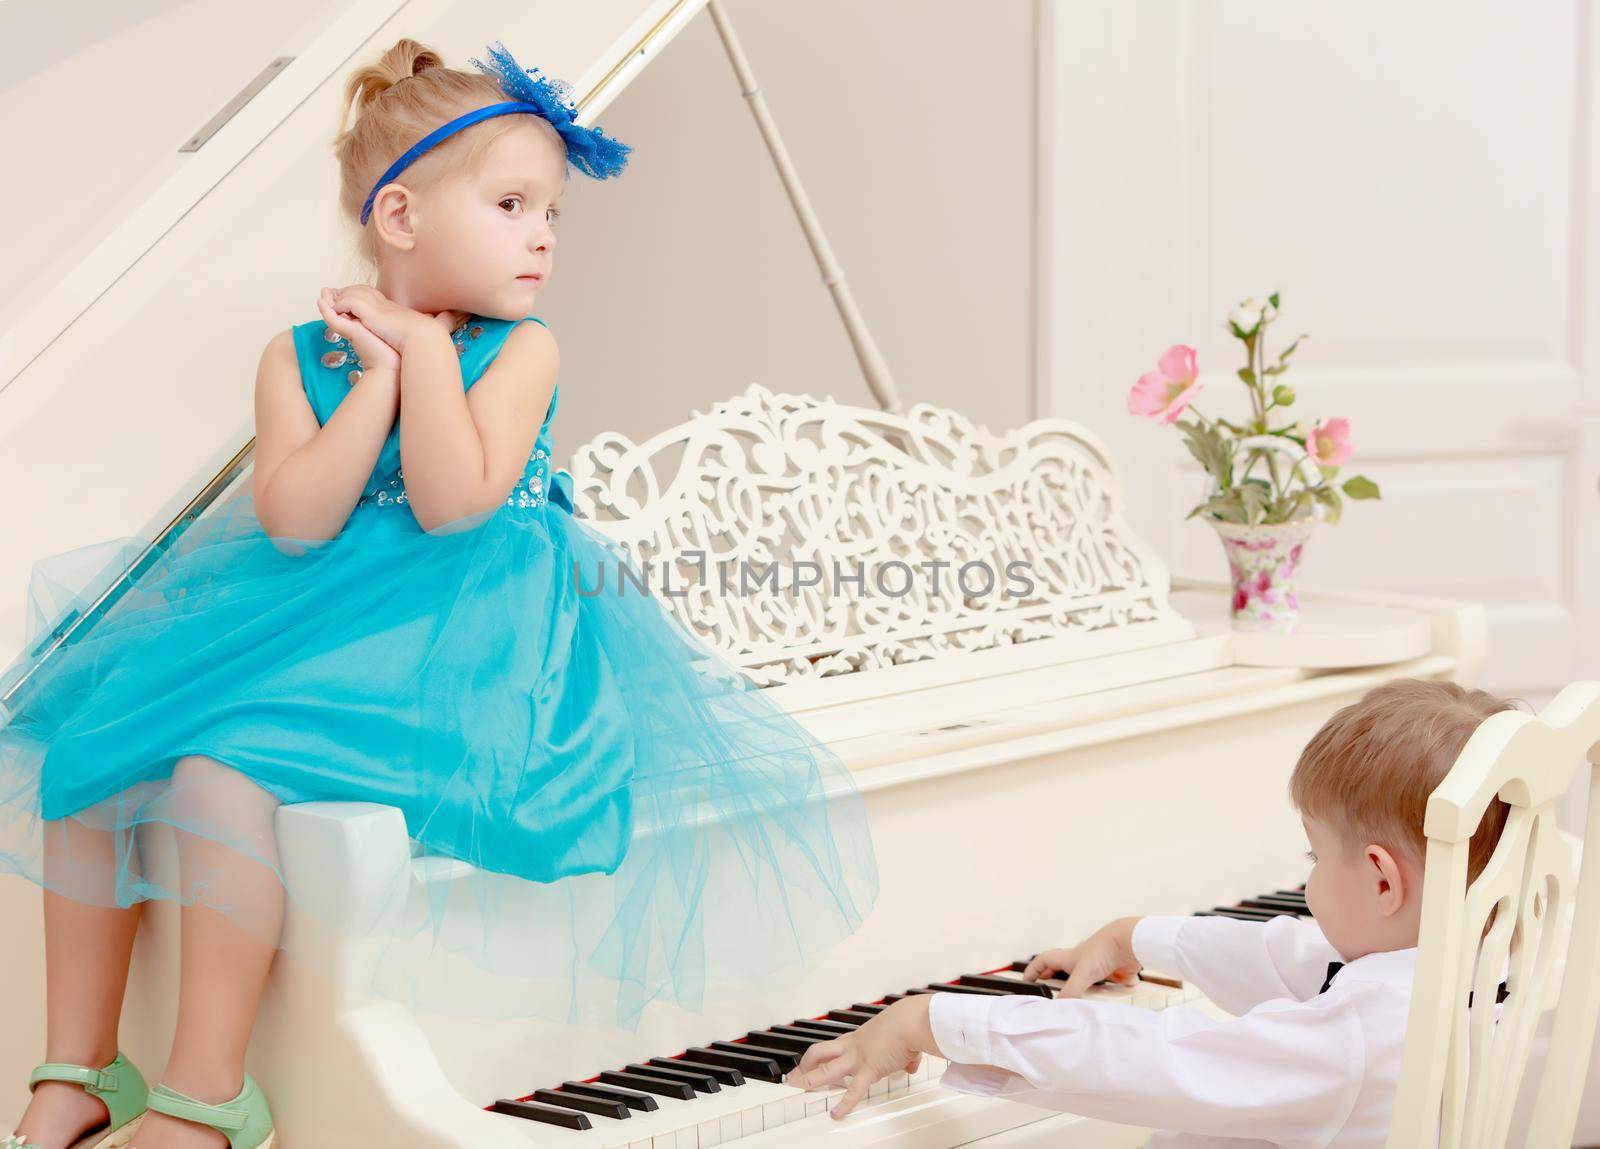 The girl and the boy play the piano by kolesnikov_studio